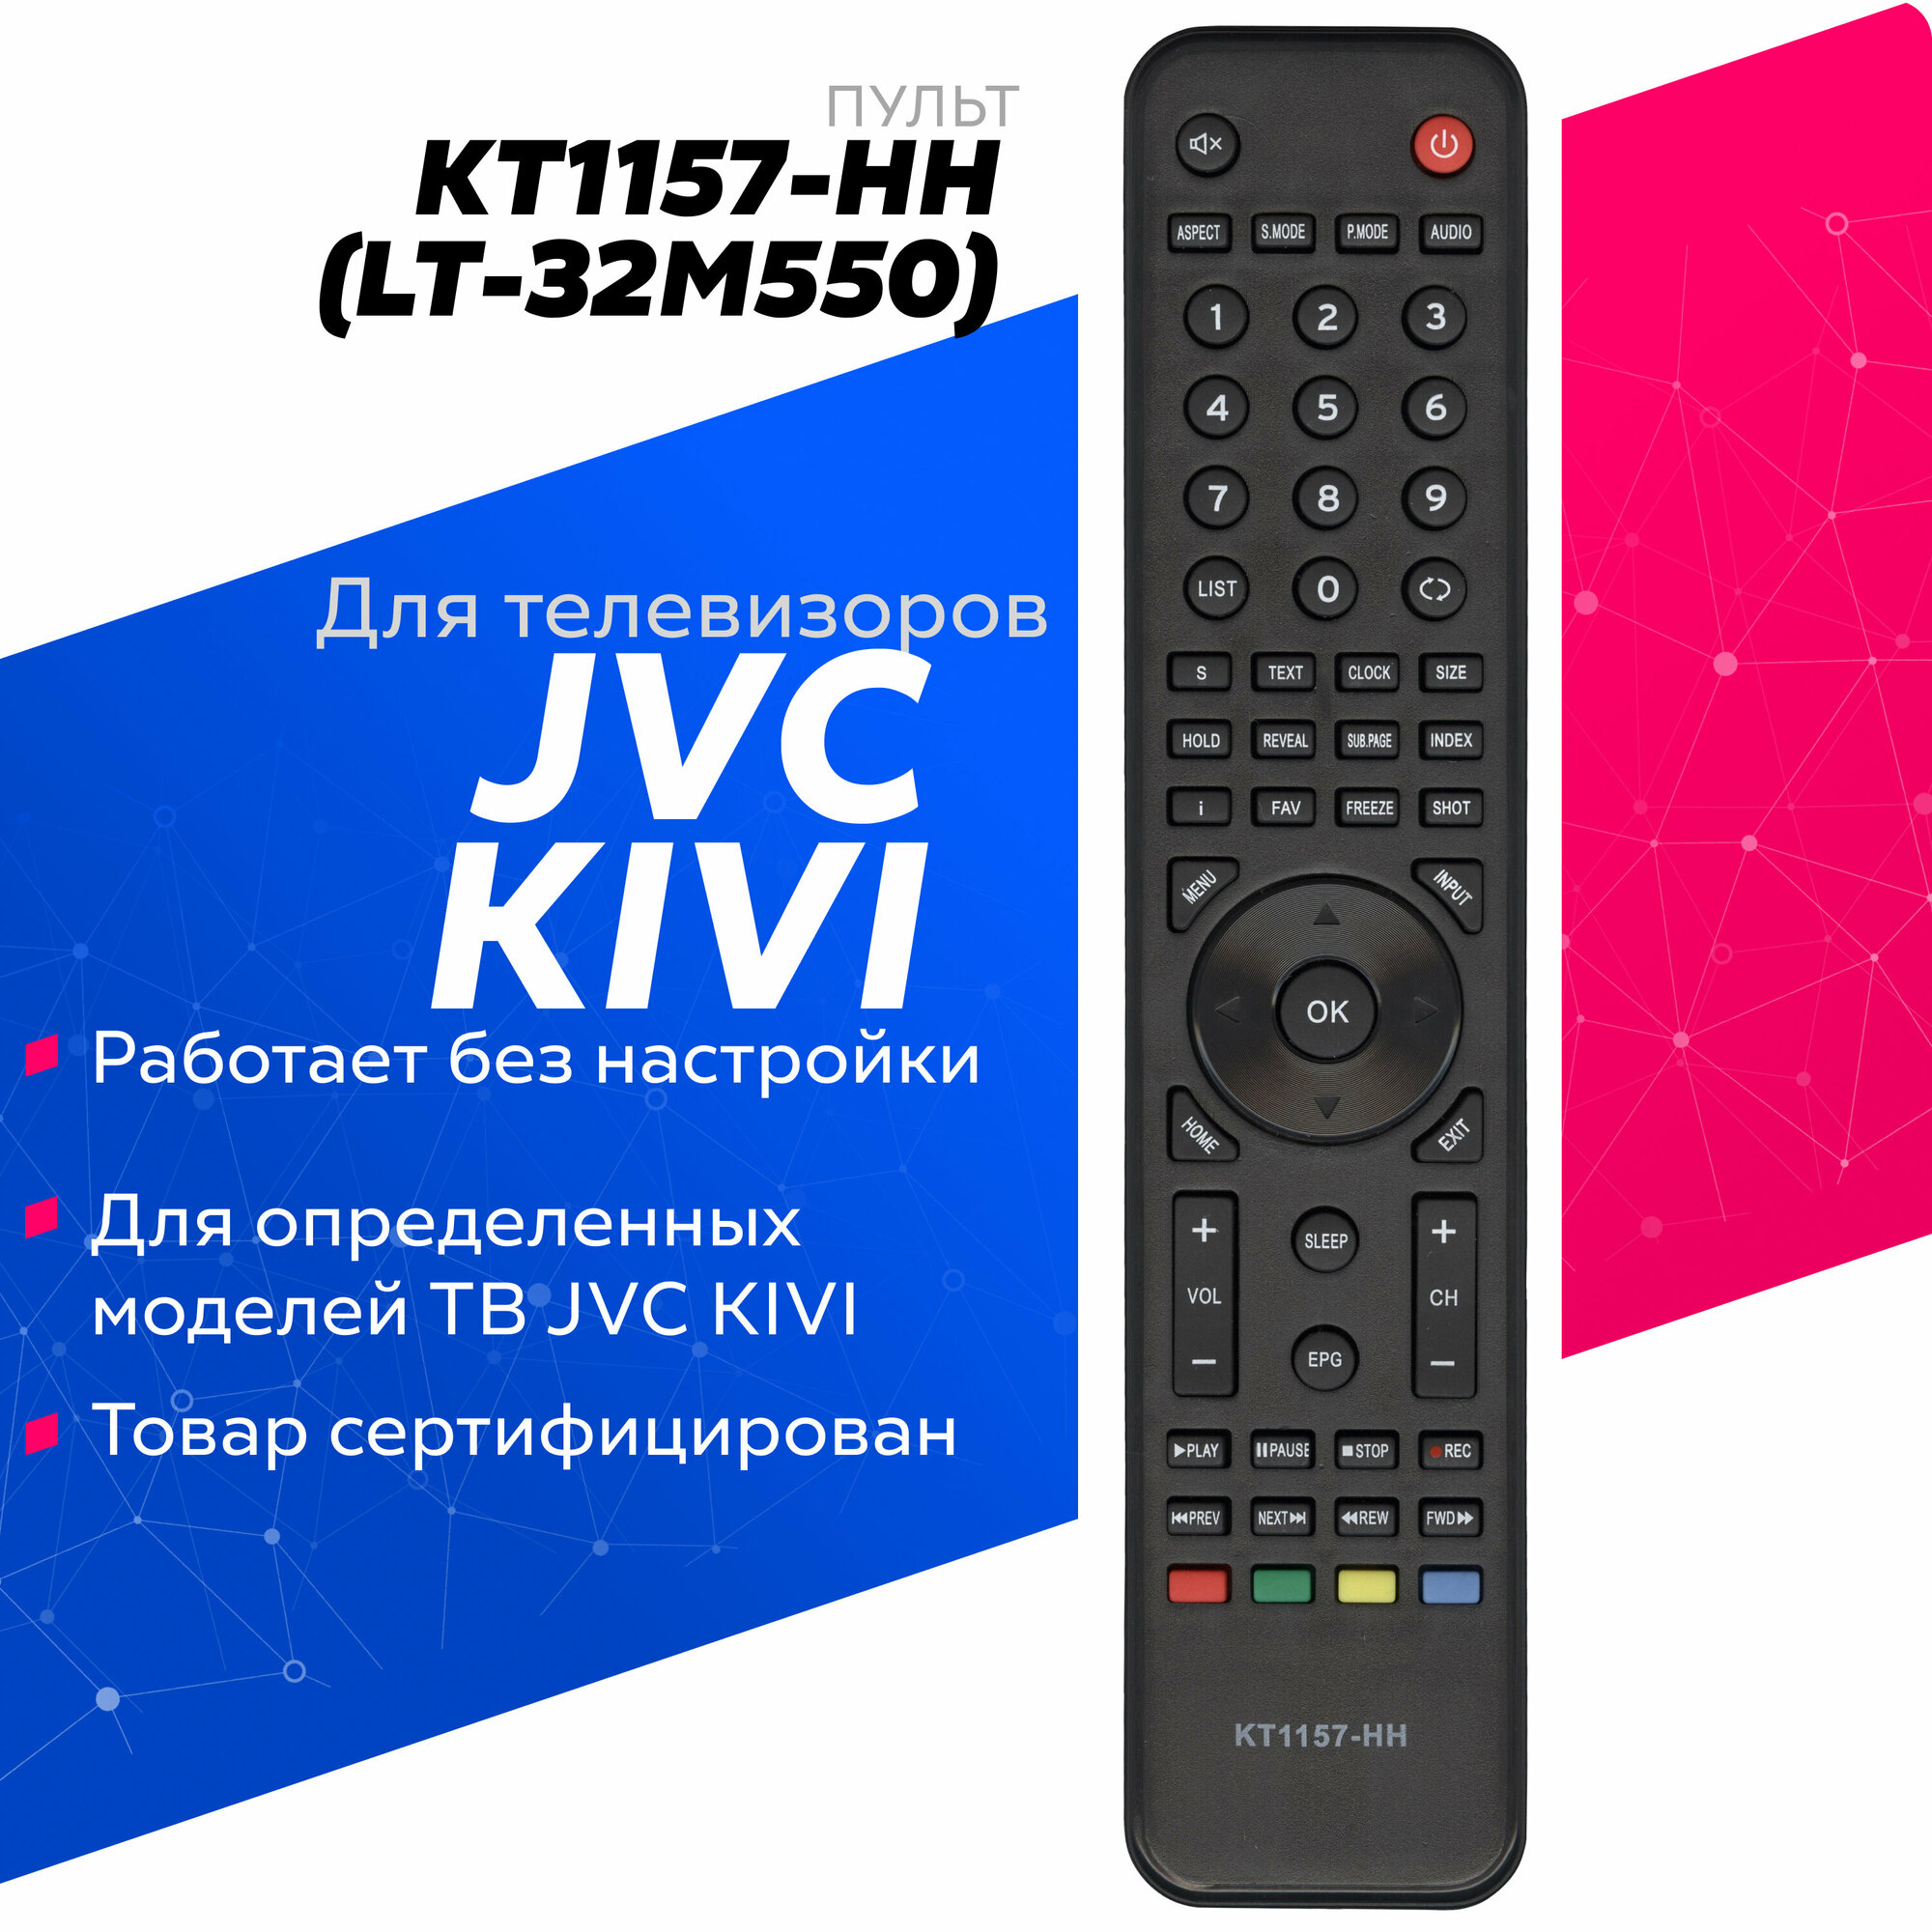 Пульт Huayu KT1157-HH (LT-32M550) для телевизора JVC